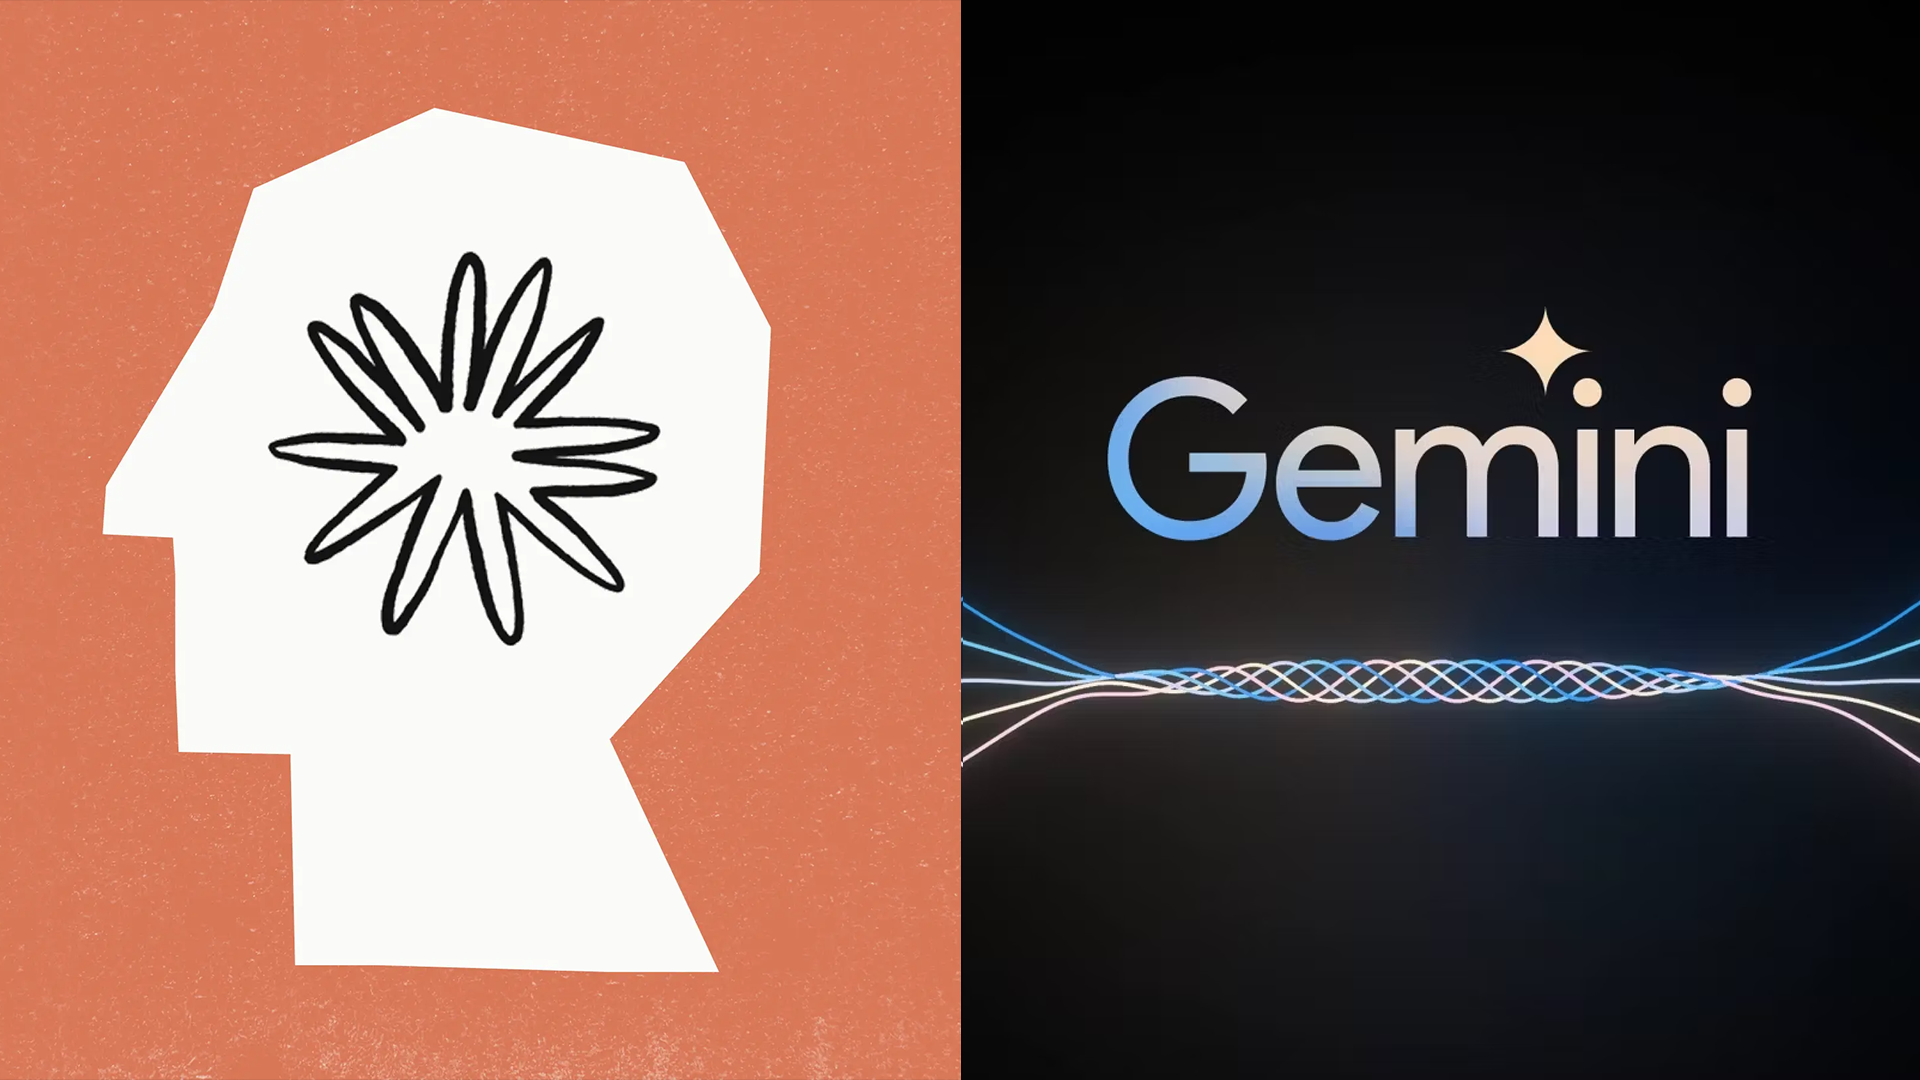 Claude 3 logo beside the Google Gemini logo